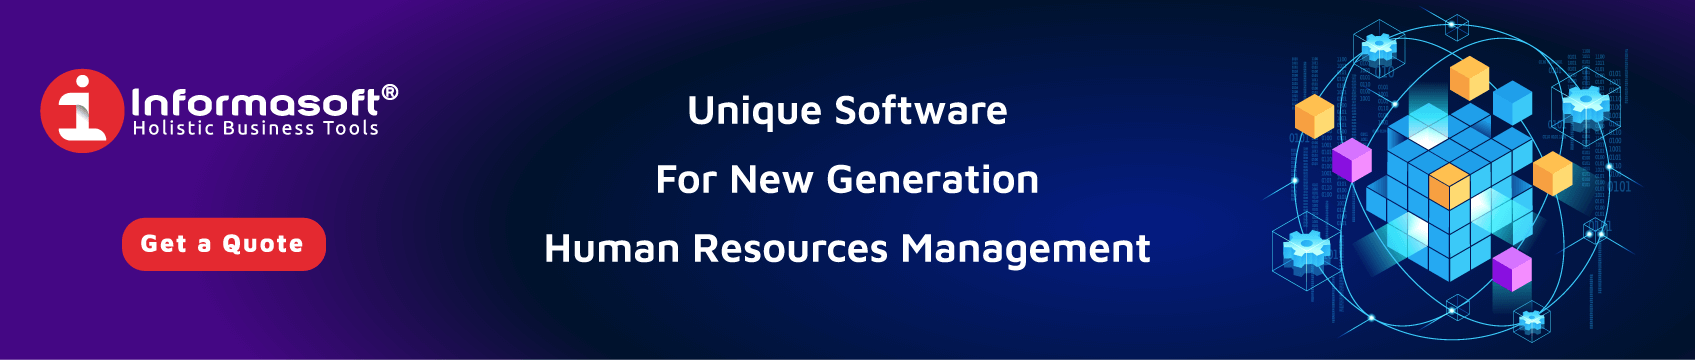 Human Resources Management Software - Informasoft